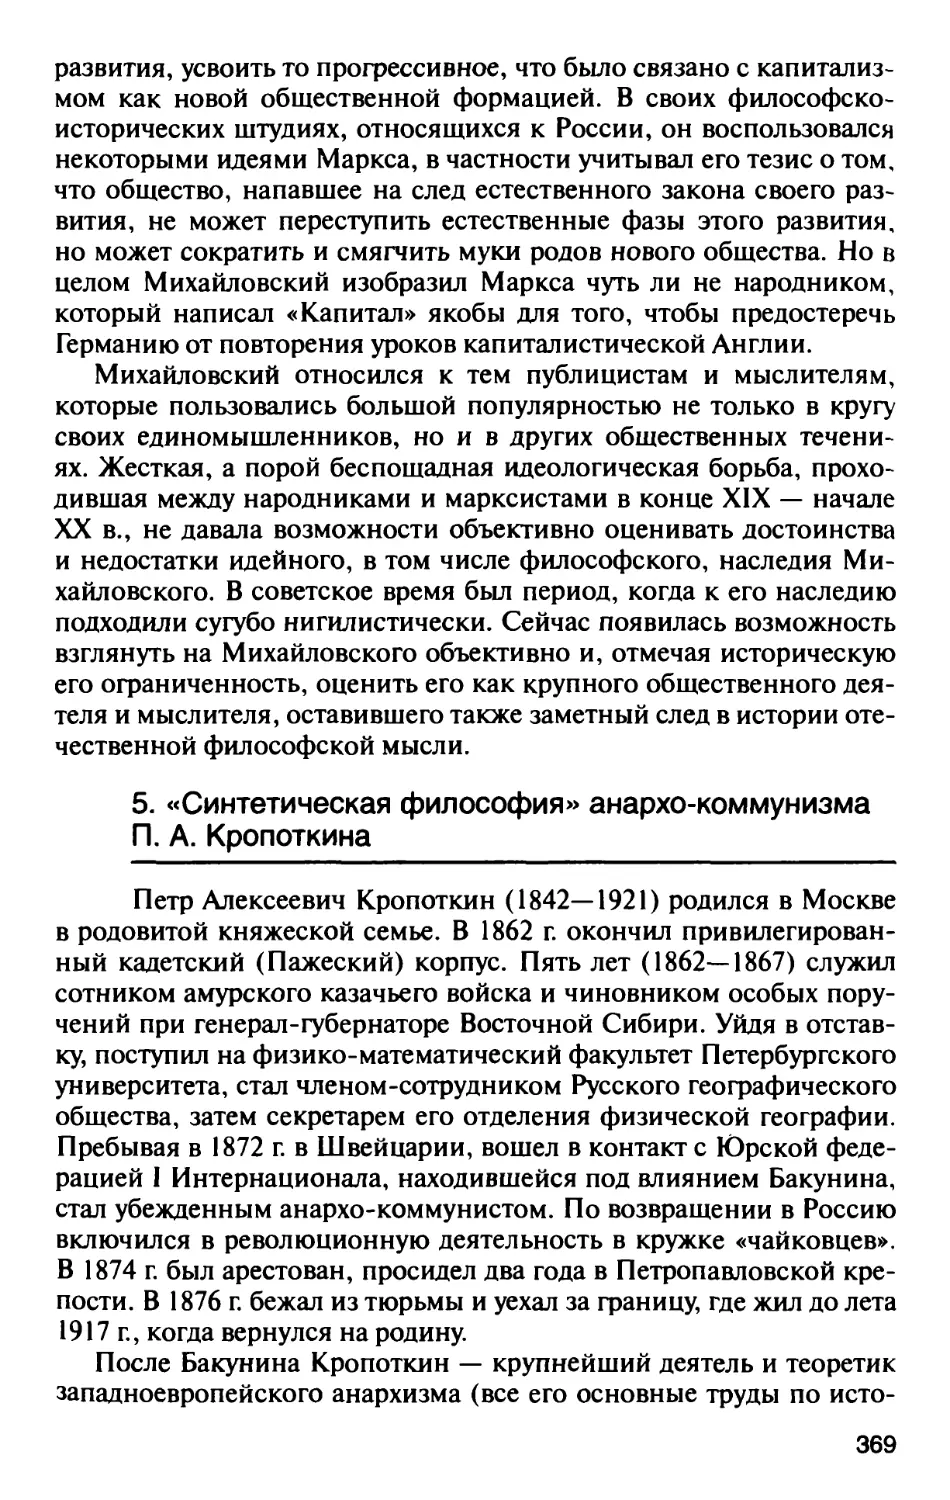 5. «Синтетическая философия» анархо-коммунизма П.А. Кропоткина